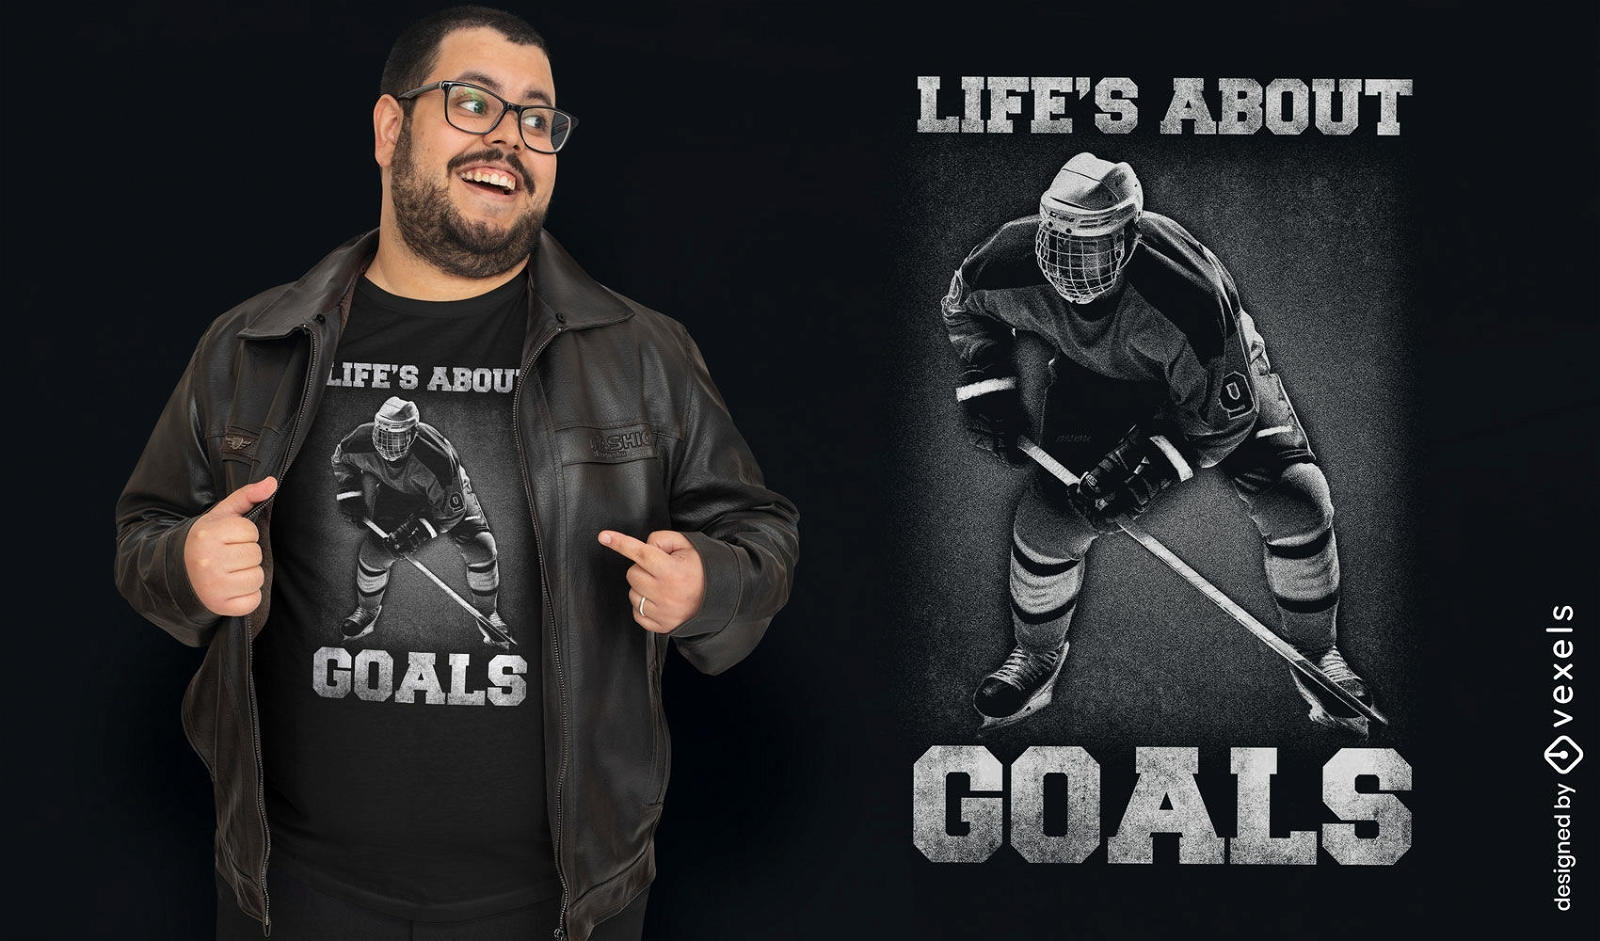 Hockey goals quote t-shirt design